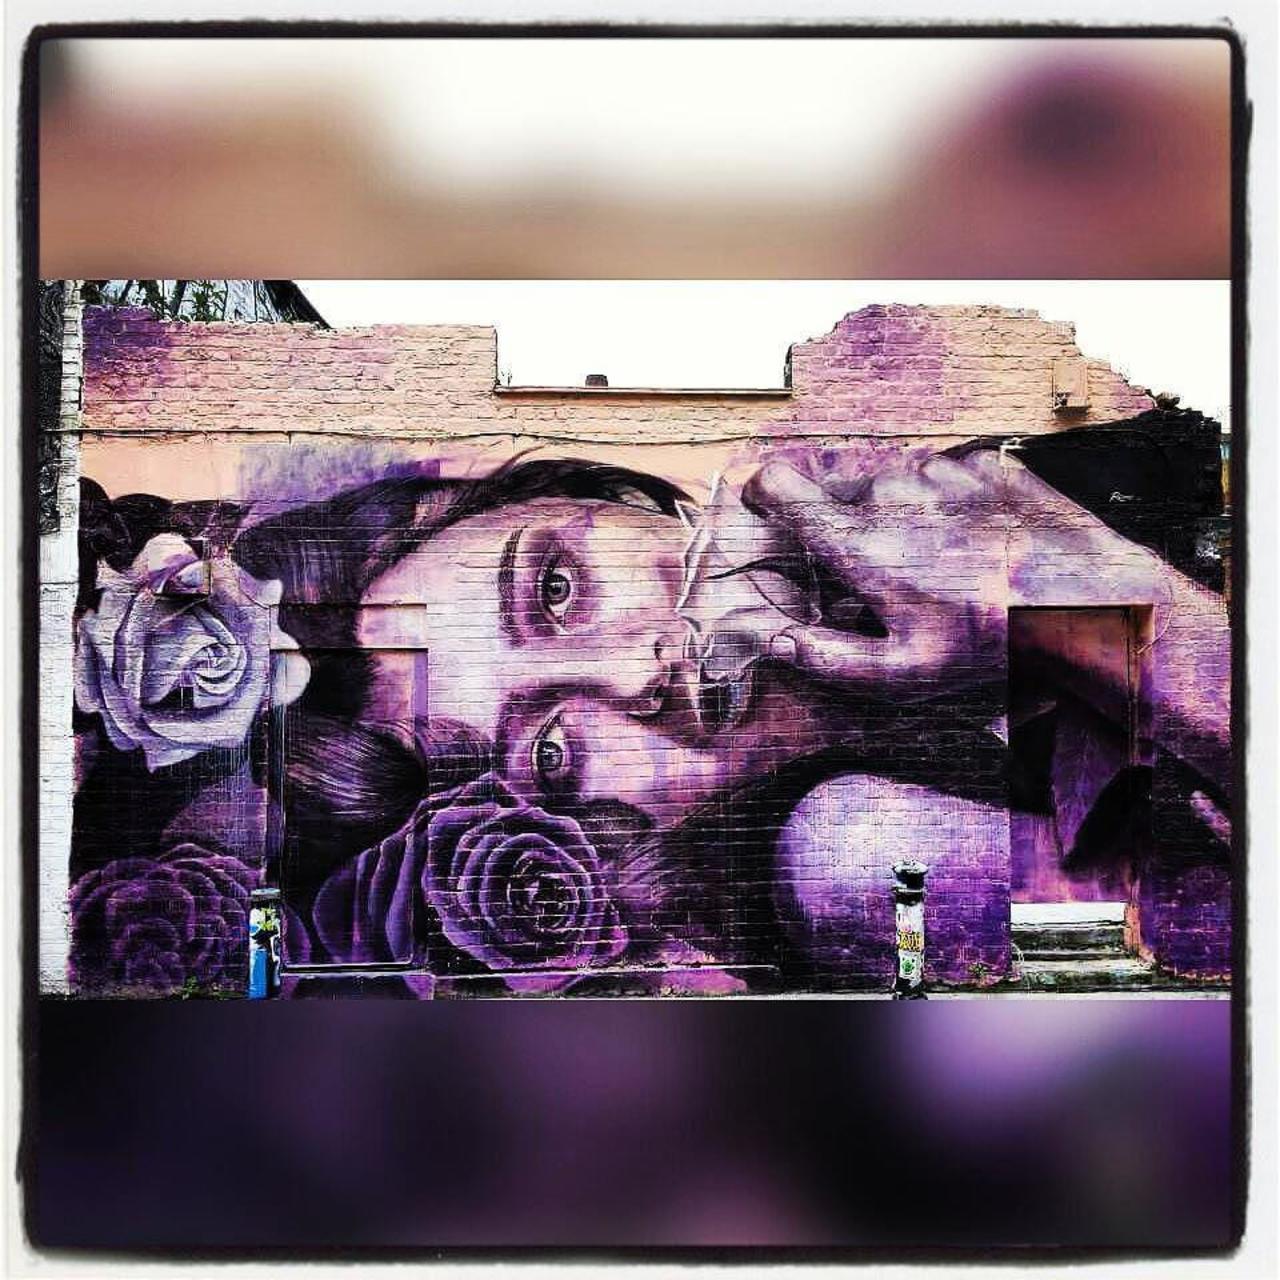 #streetart #london #rone #girl #purple #rose #england #londonstreetart #street #art #streetartlondon #graffiti #ste… http://t.co/gB1D3MRlvm